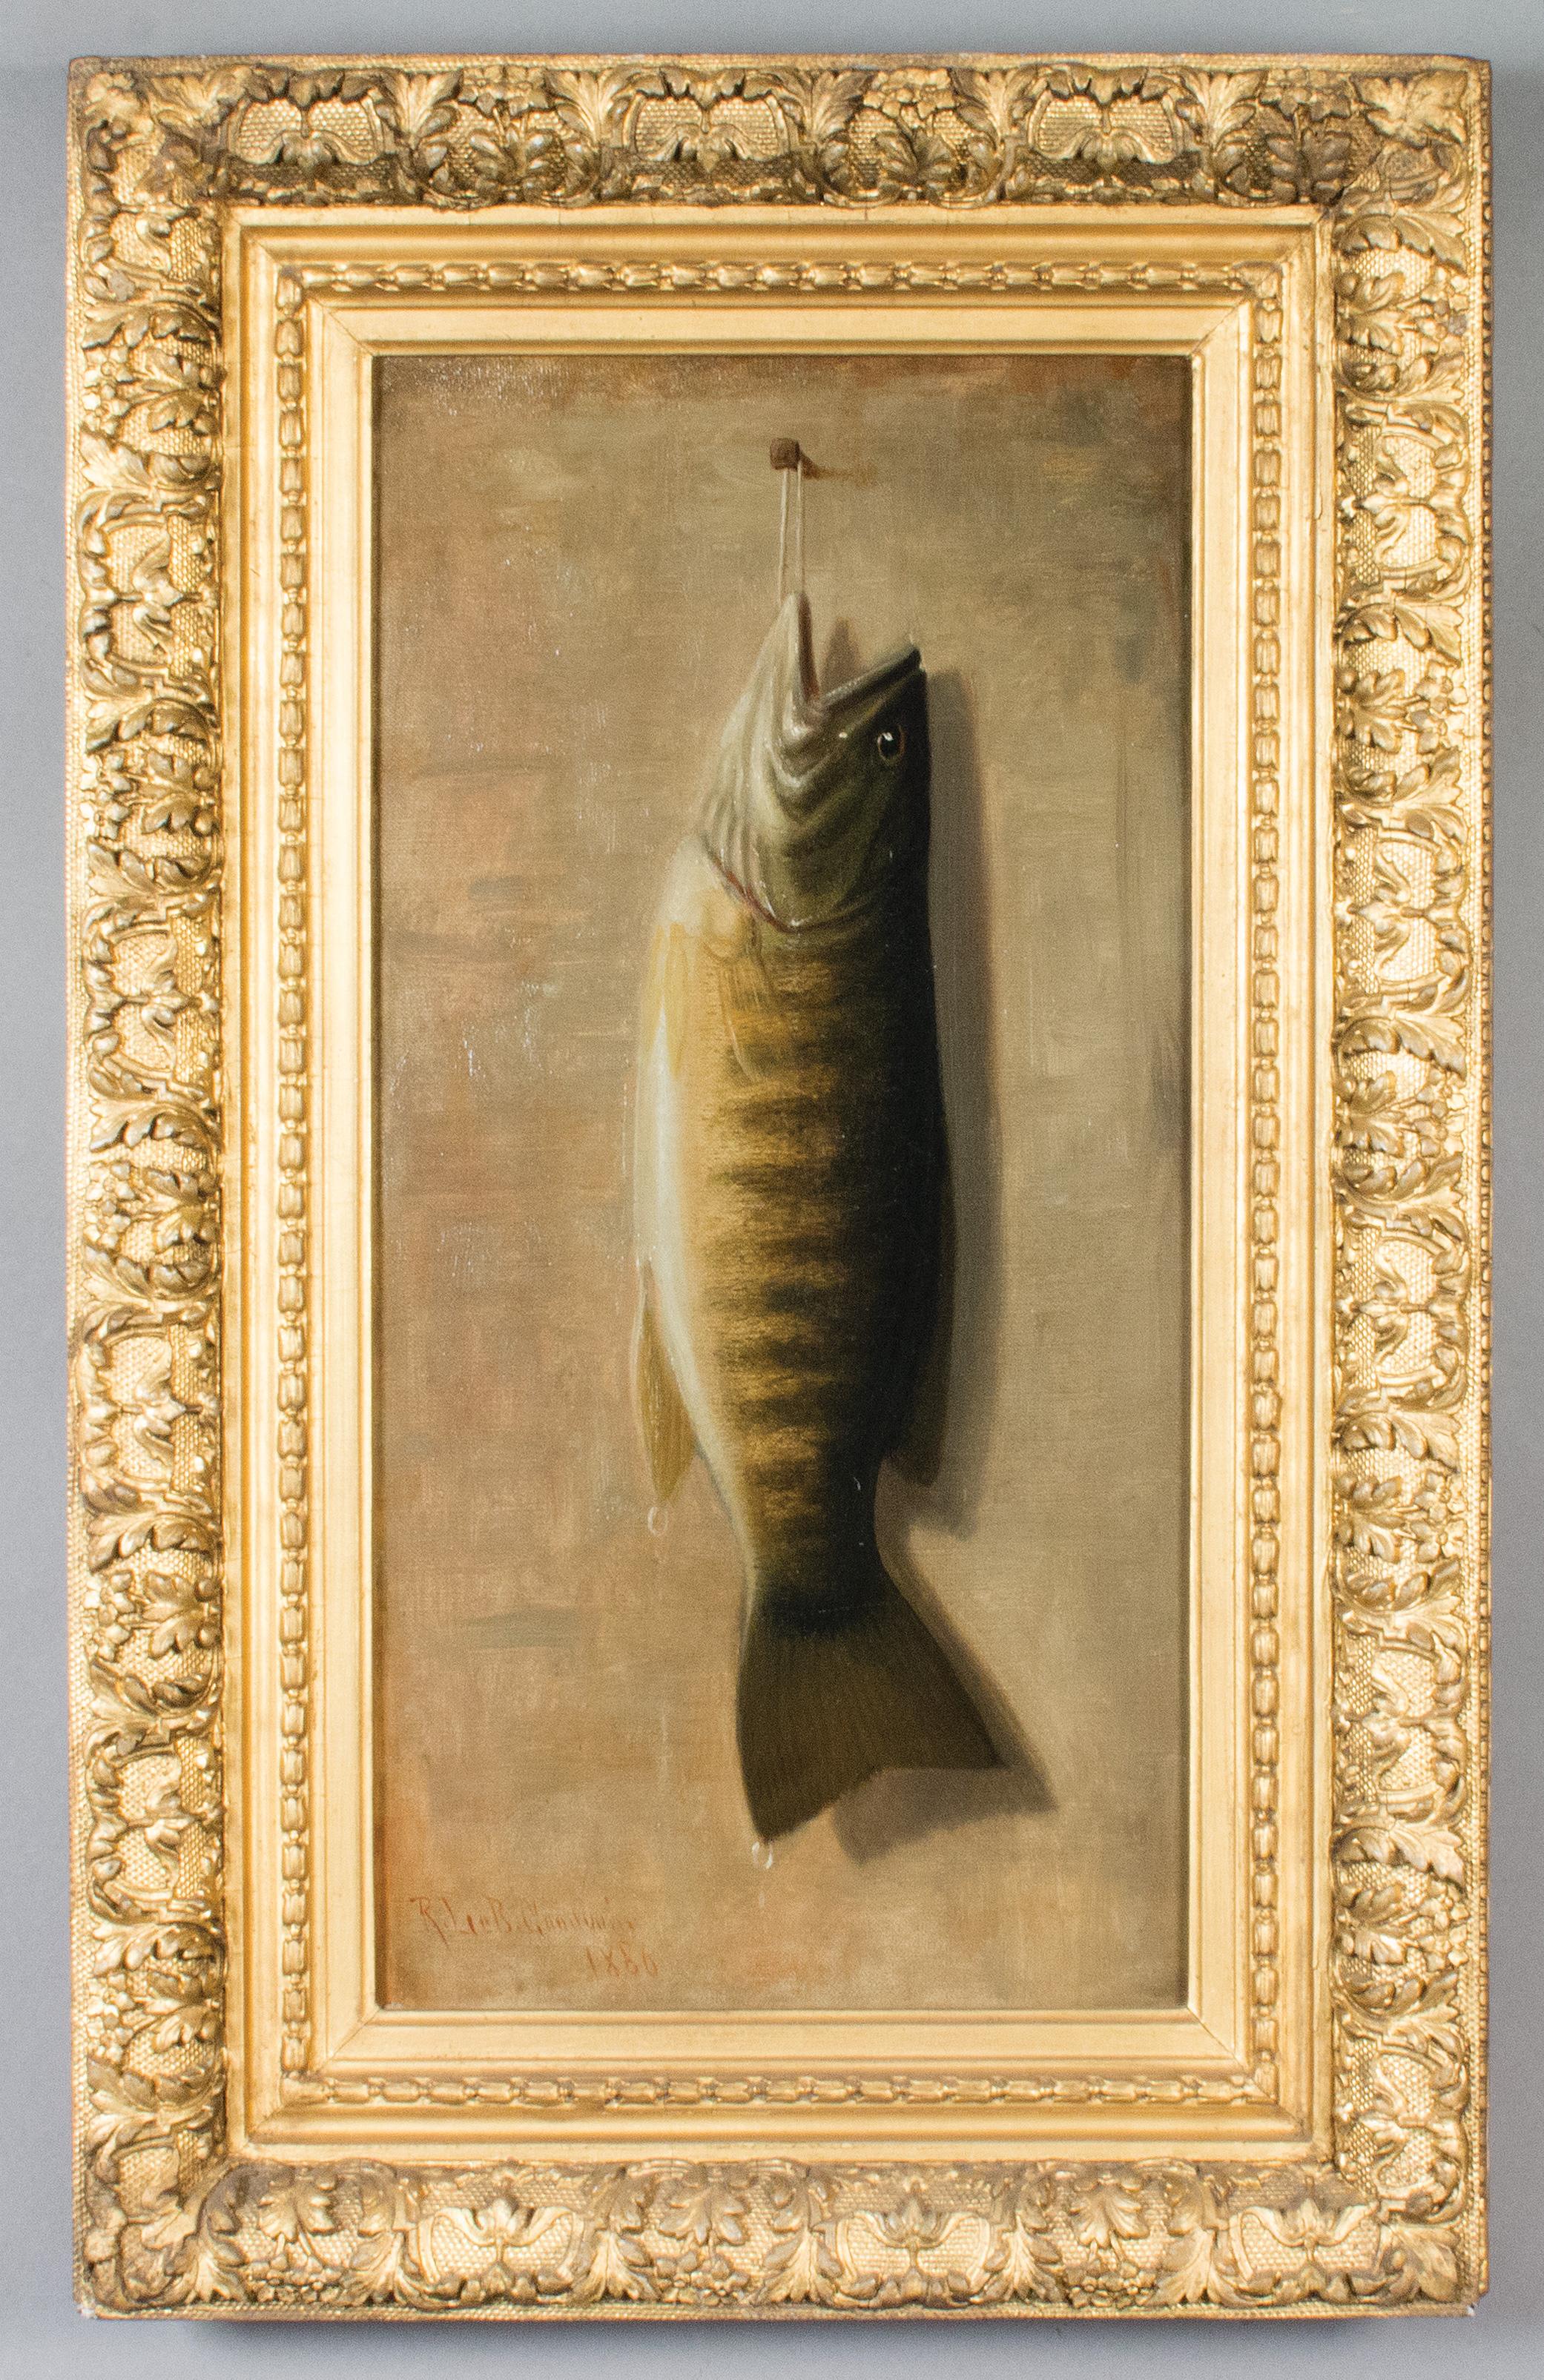 Trophy Fish by Upstate New York Artist Richard Goodwin, 1860